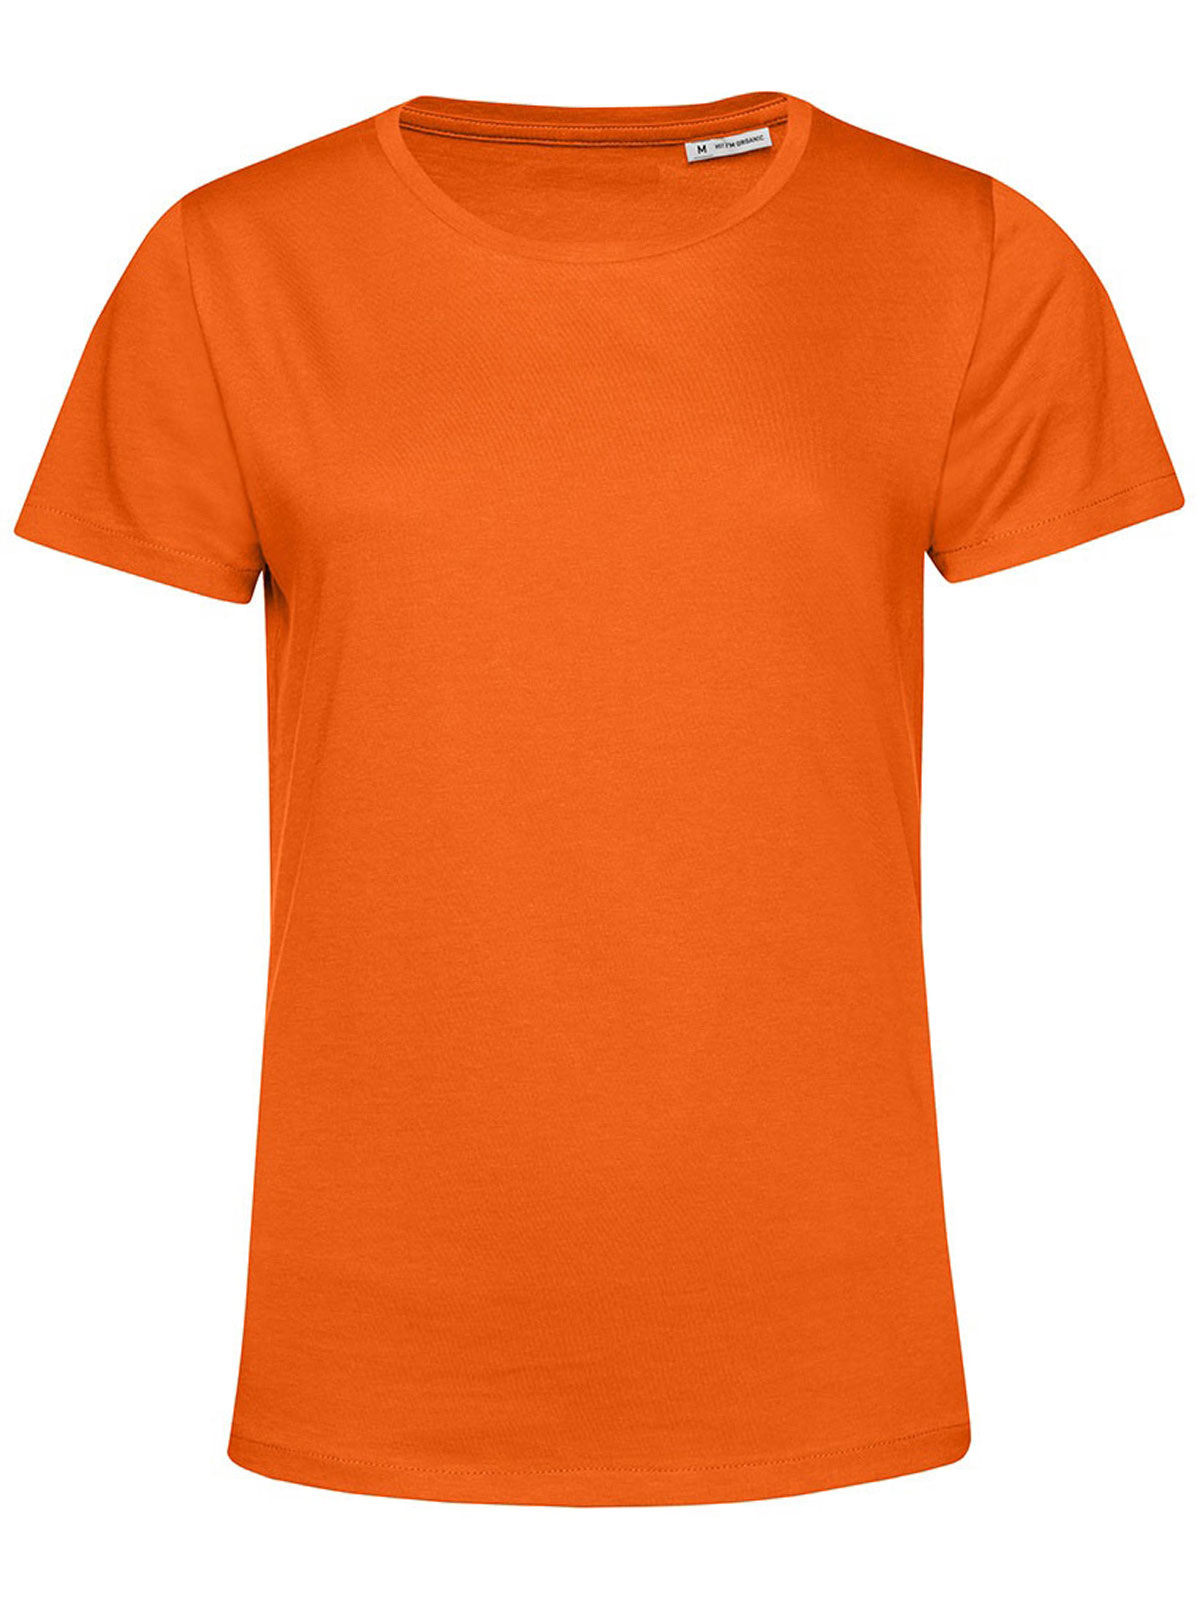 inspire-e150-women-pure-orange.webp